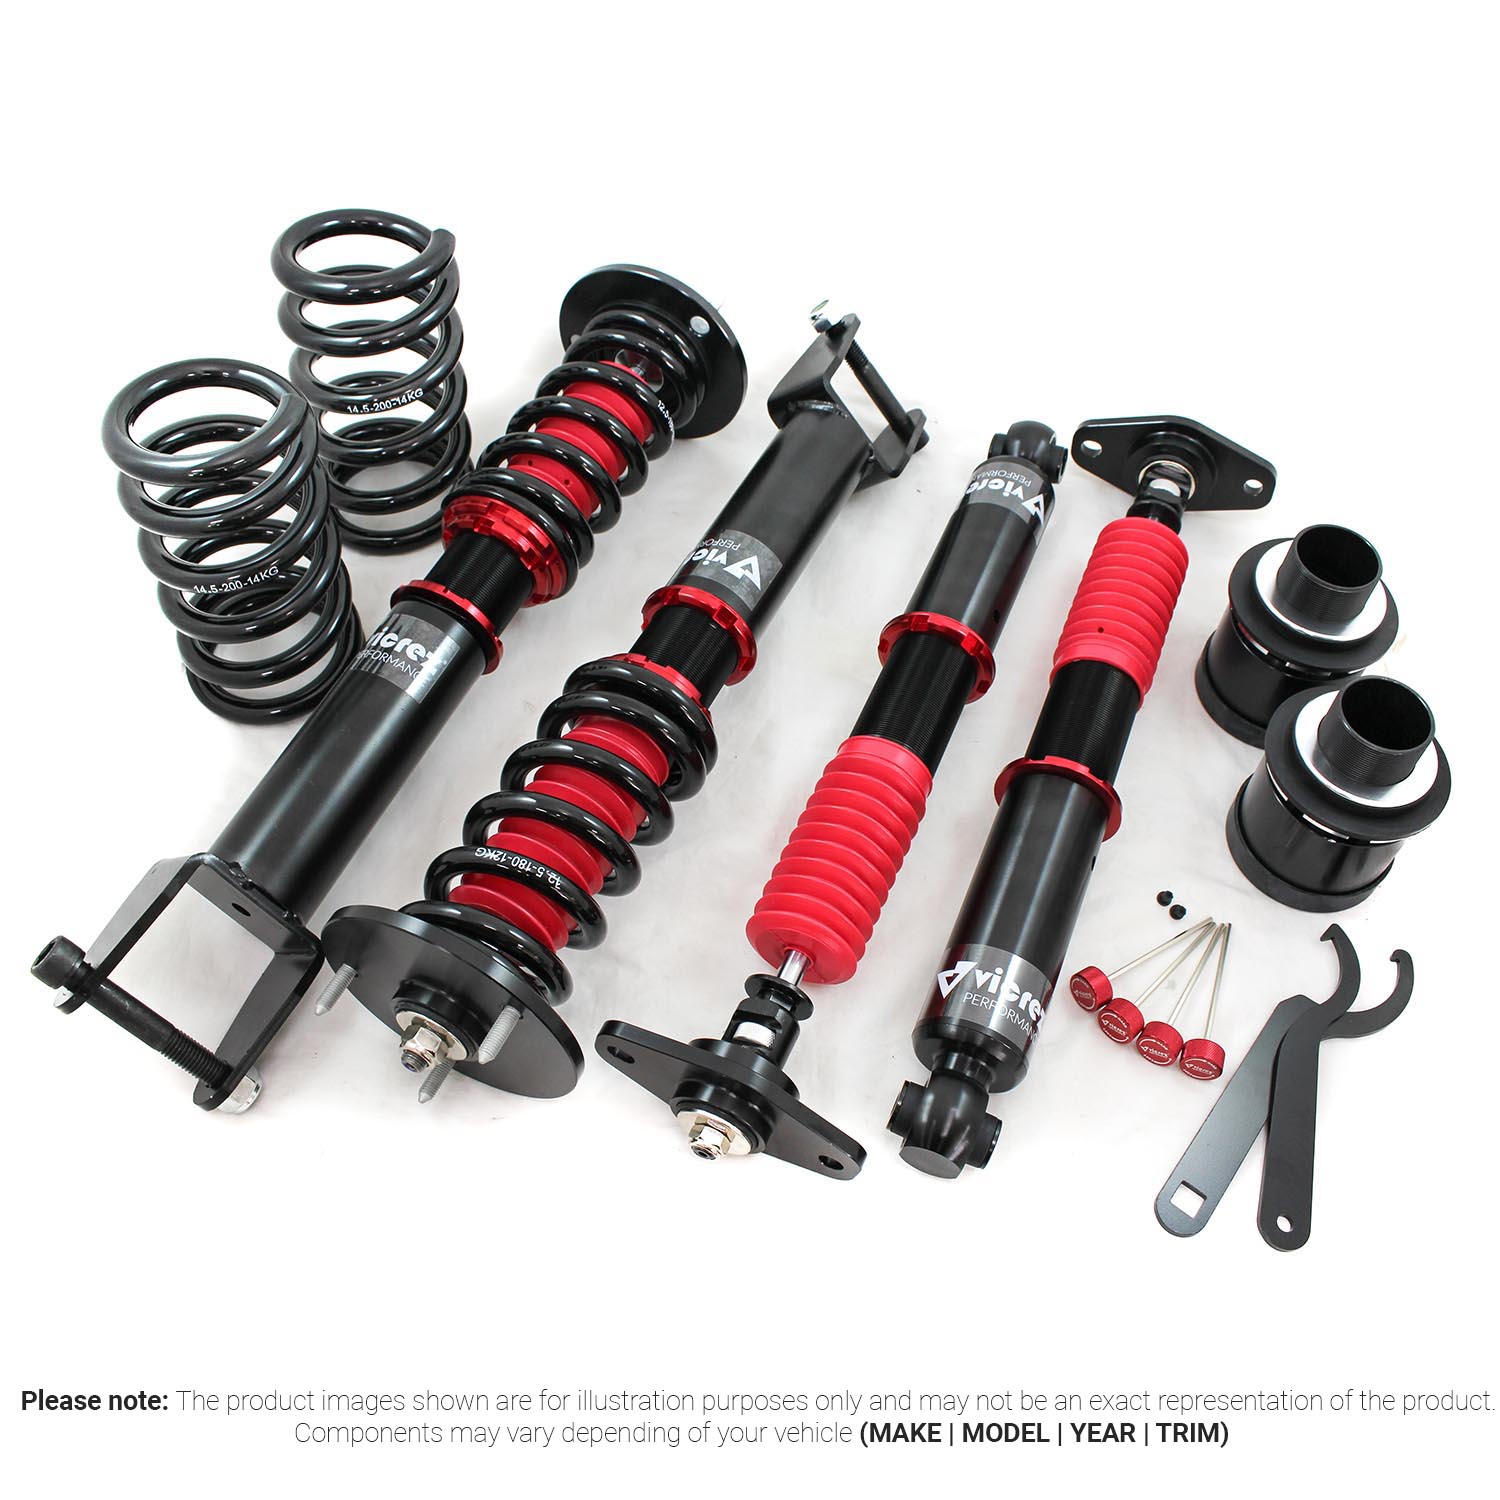 Pontiac Fiero Suspension Kits for Sale - 46 Brands